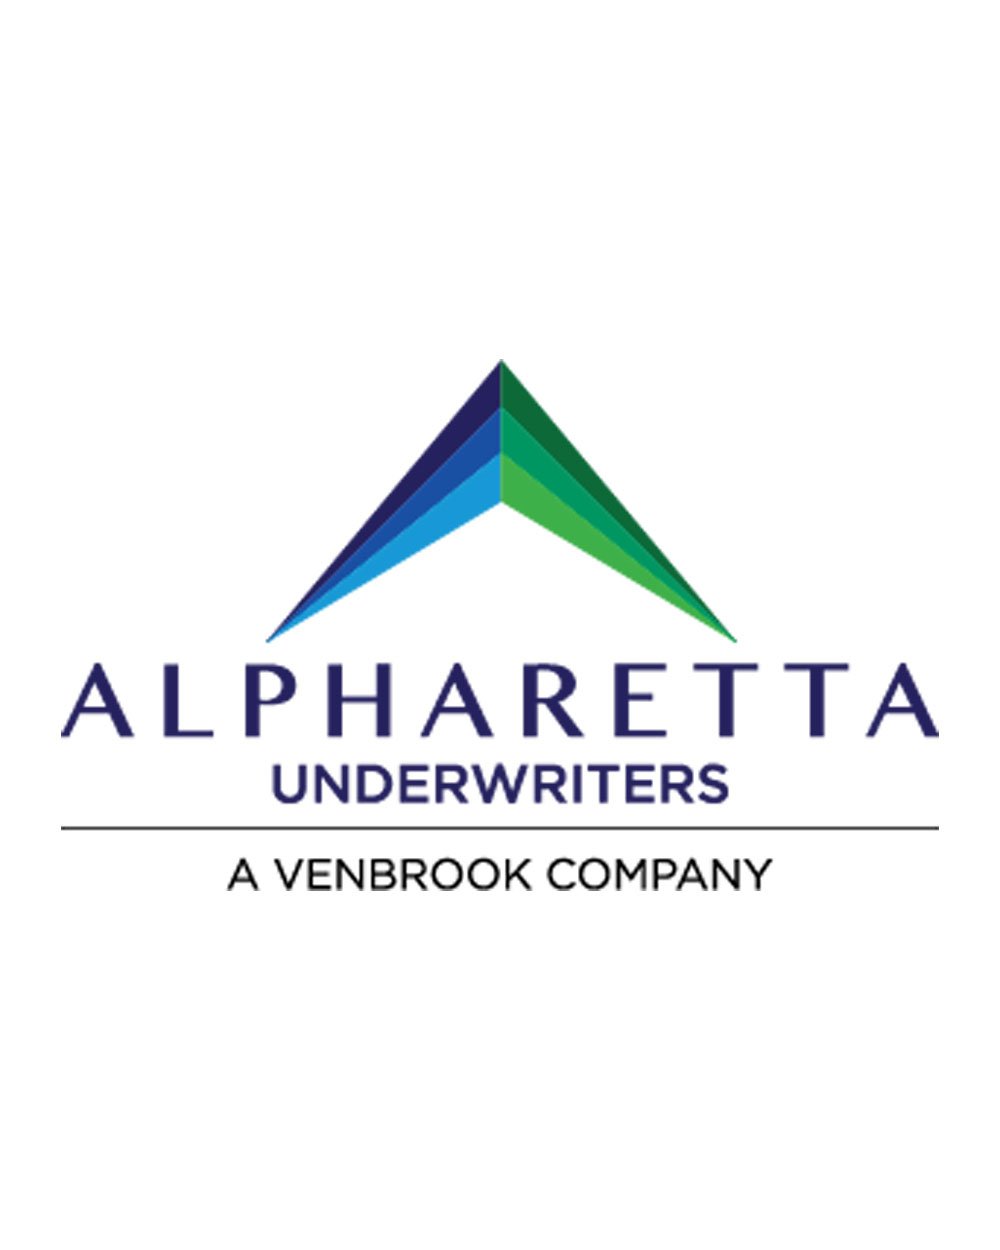 Alpharetta Underwriters